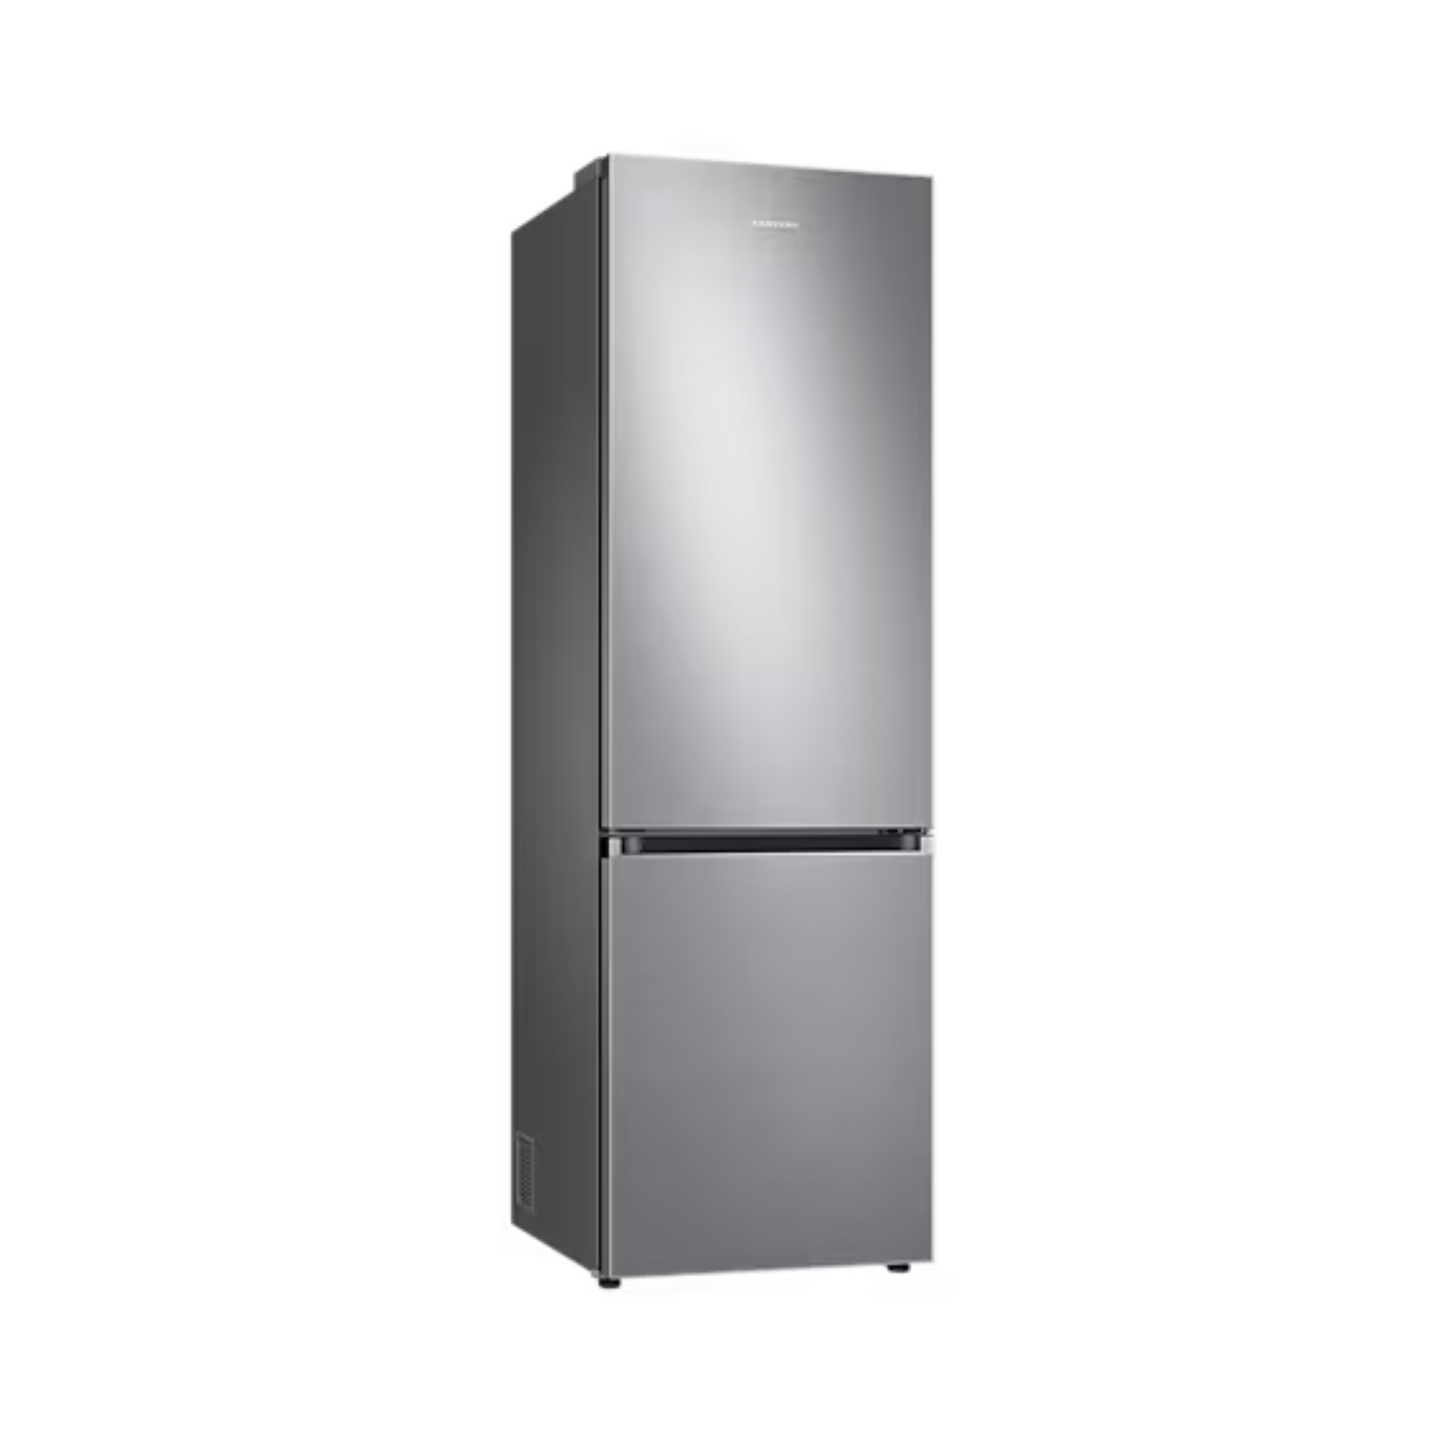 Samsung 365L Refrigerator, RB36T605CS9